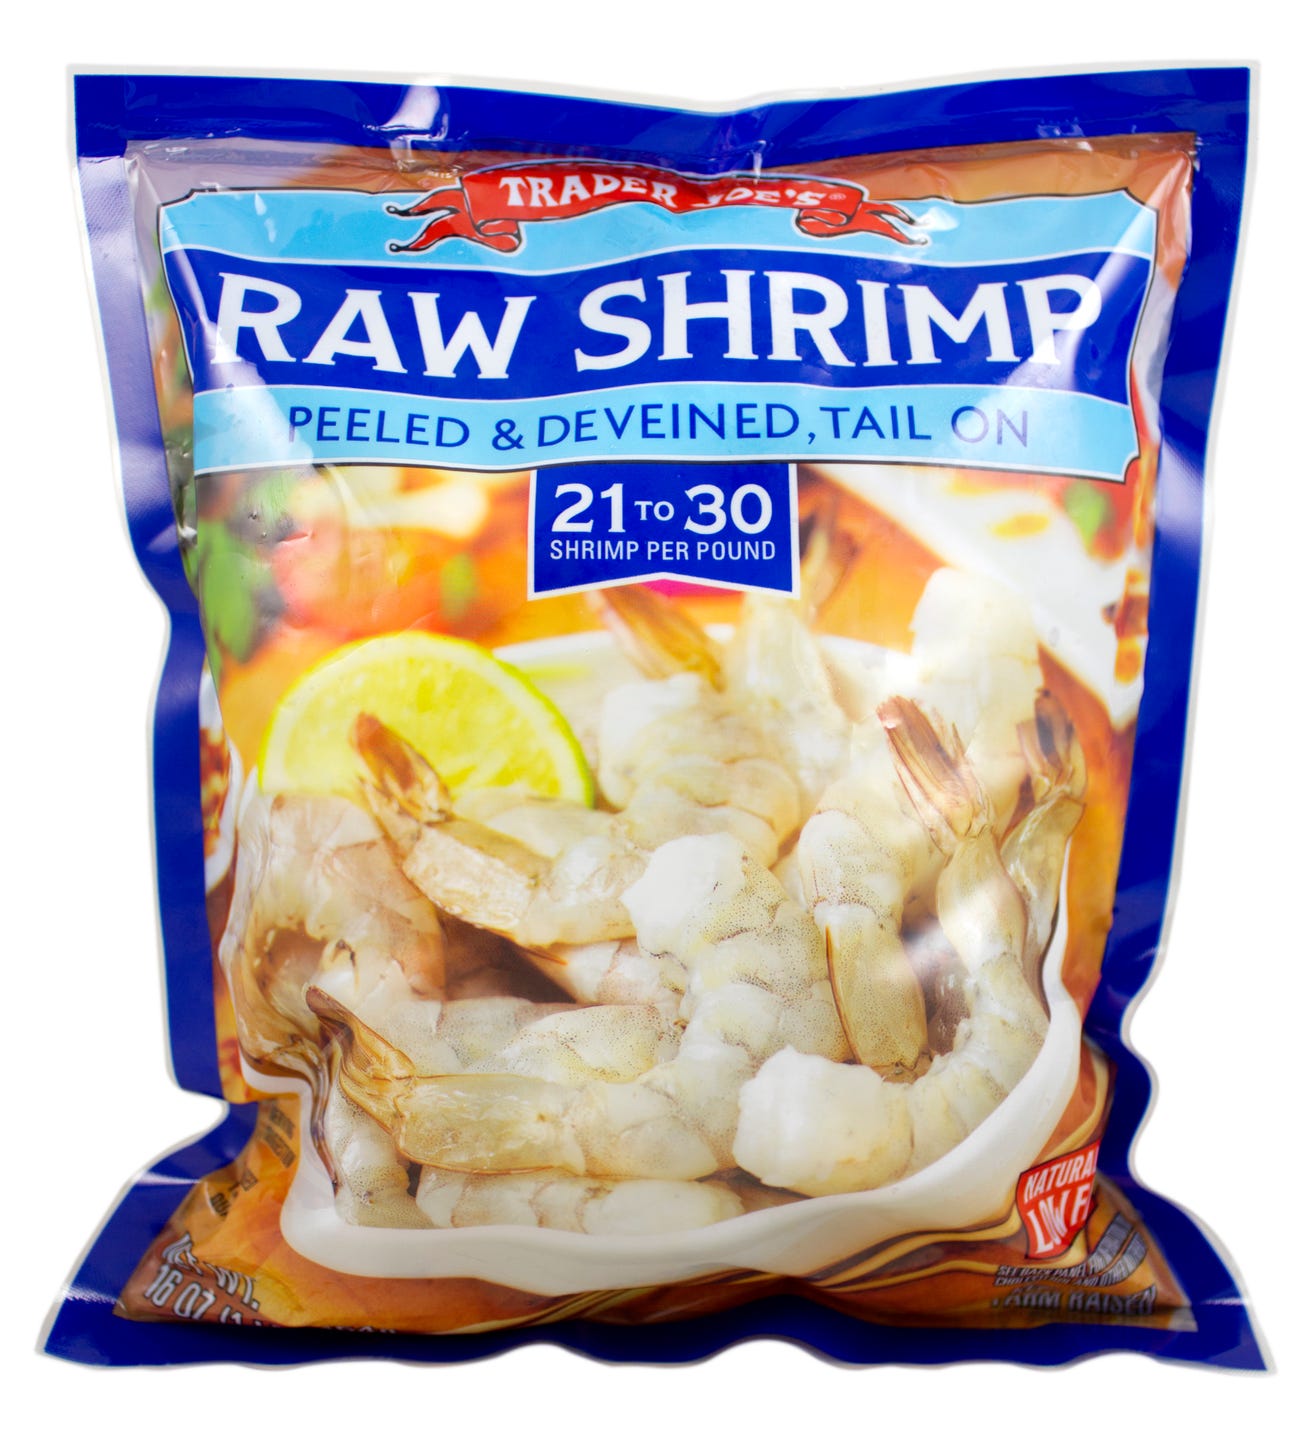 trader joe's raw shrimp